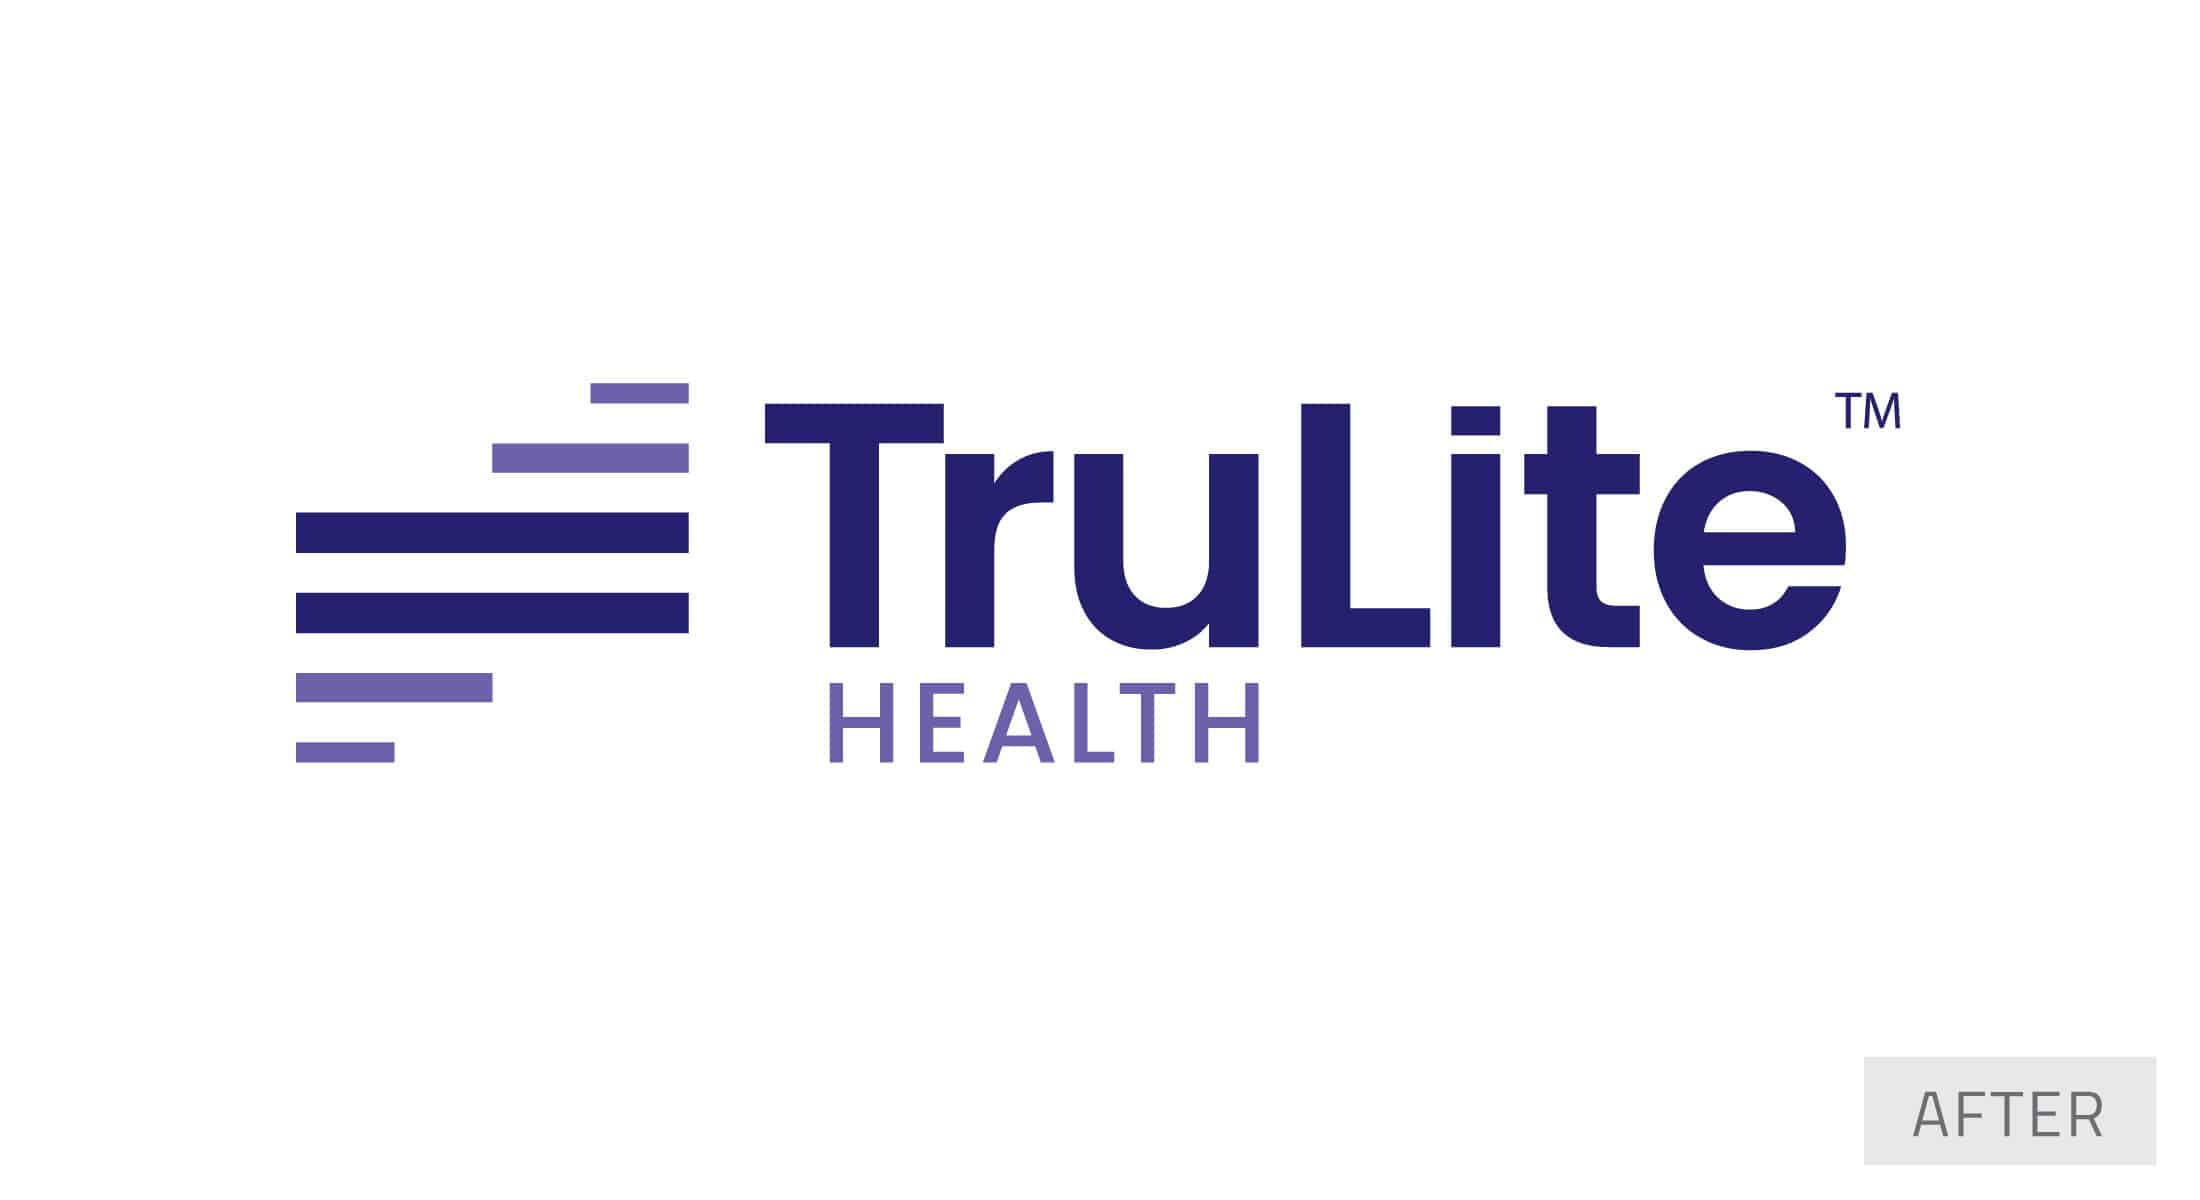 TruLite Health logo after redesign